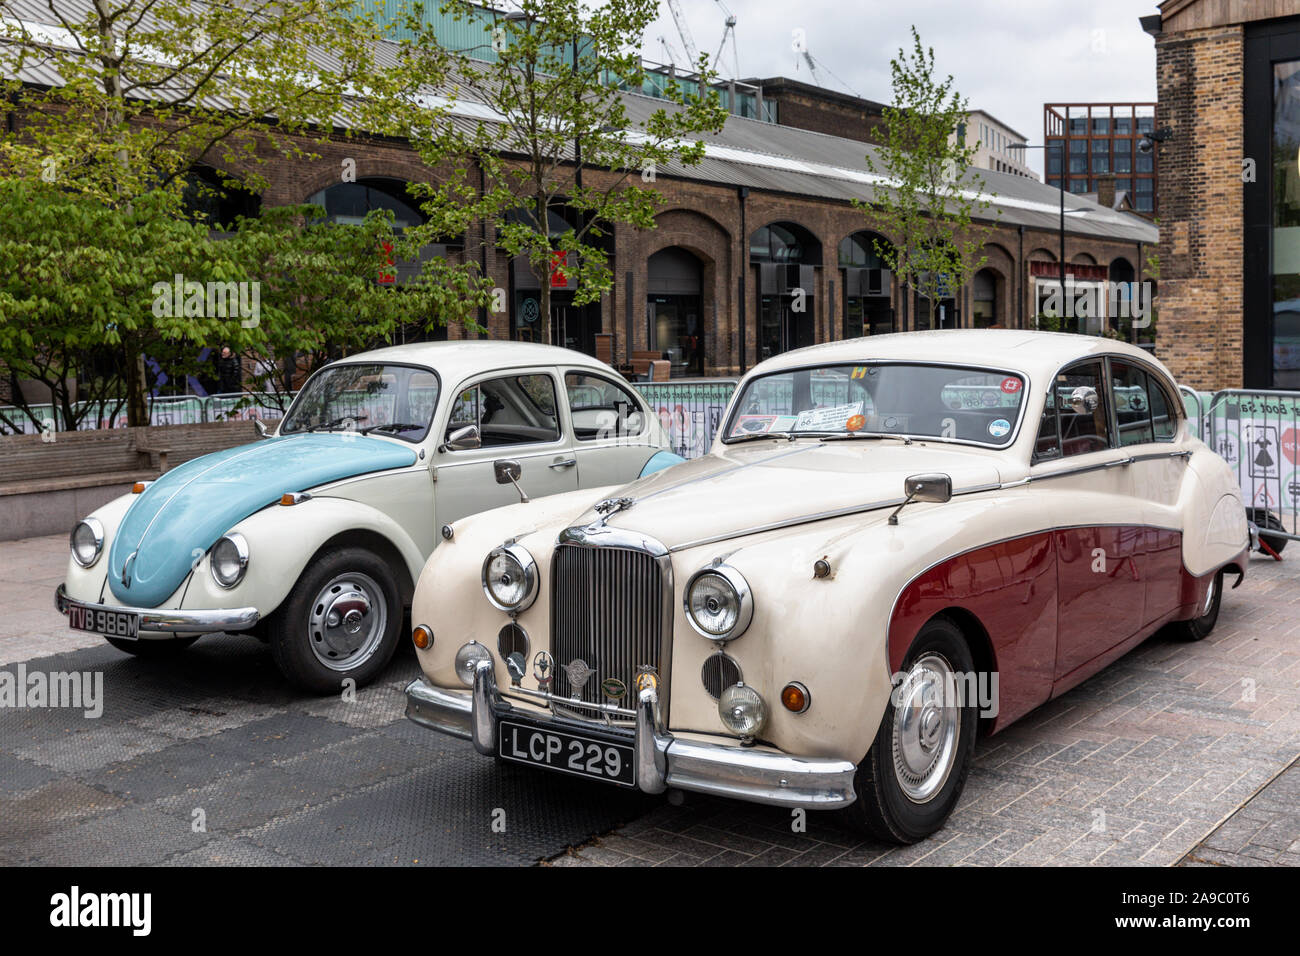 Two vintage cars, a 1959 Jaguar MK IX and 1973 VW Beetle, London Classic Car Boot Sale, King's Cross, London, UK Stock Photo